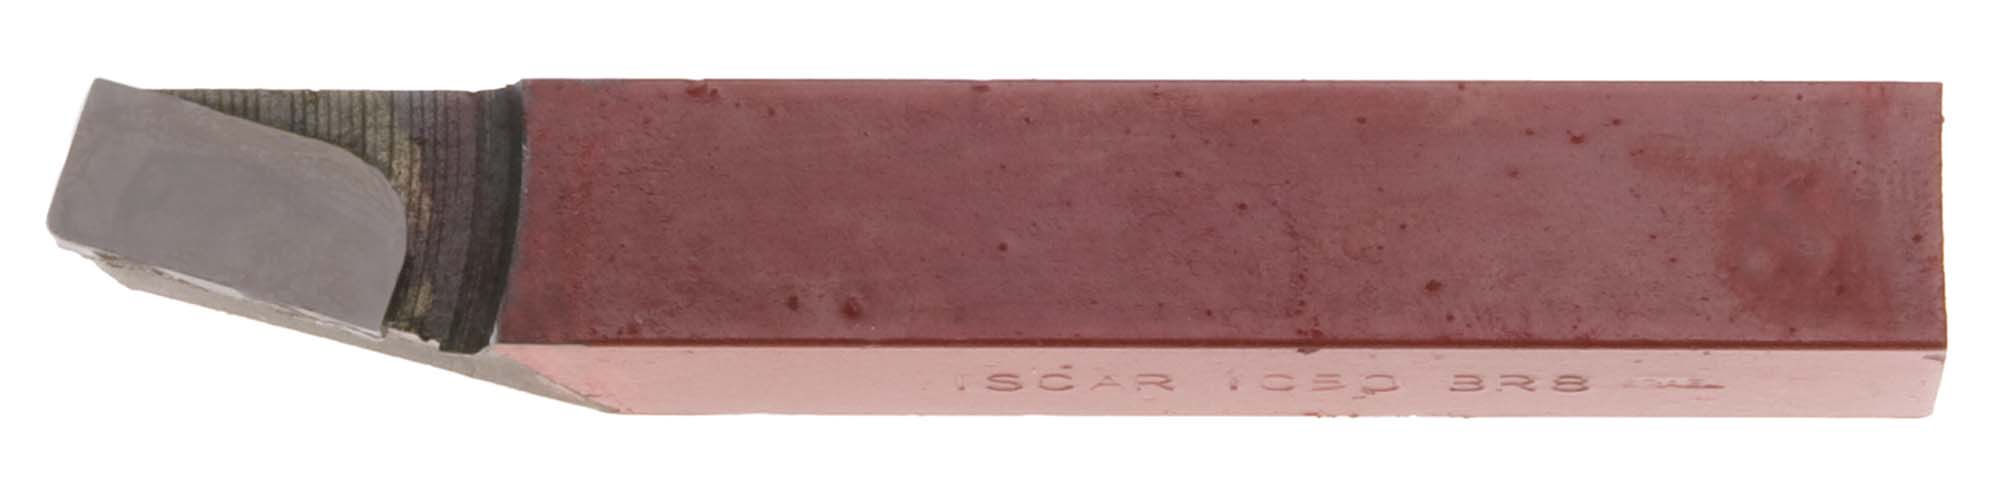 5/16" Square BL Iscar Carbide Toolbit Grade IC50/C5